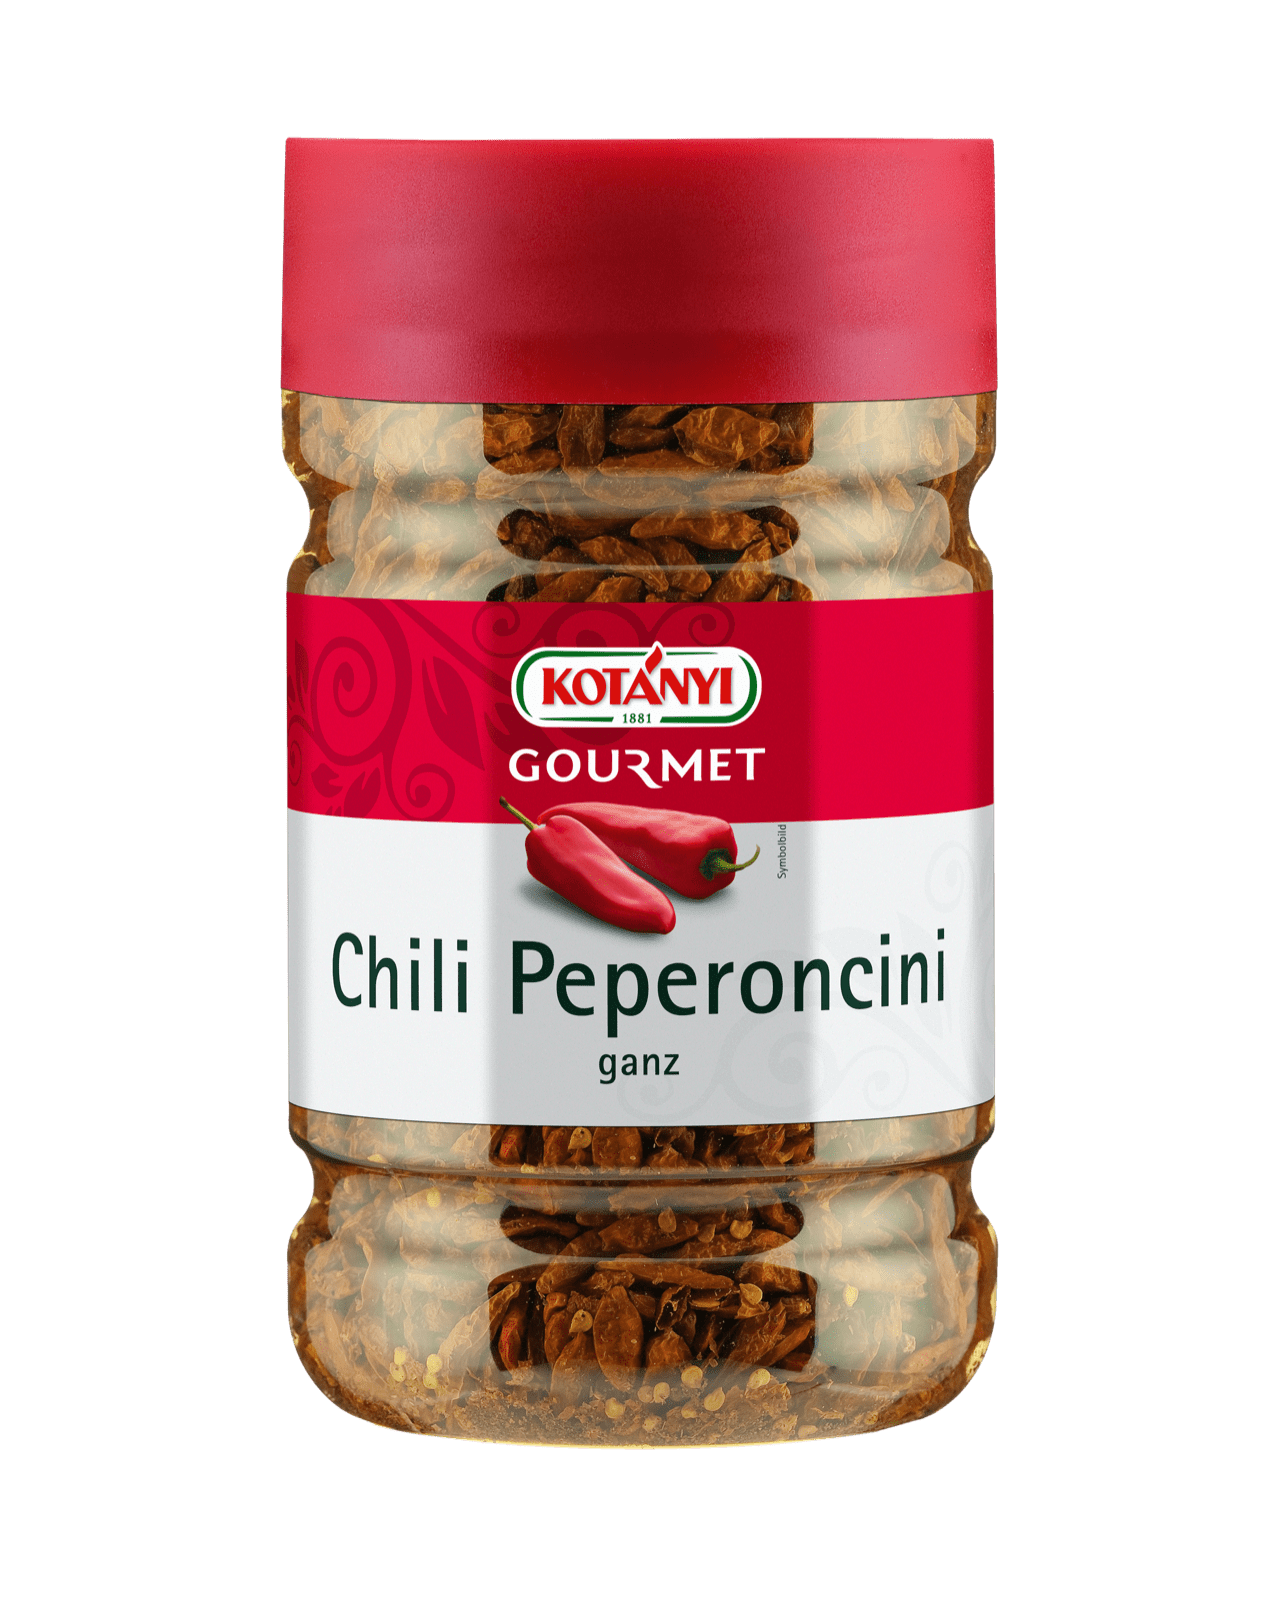 Chili Peperoncini ganz | Kotányi Gourmet